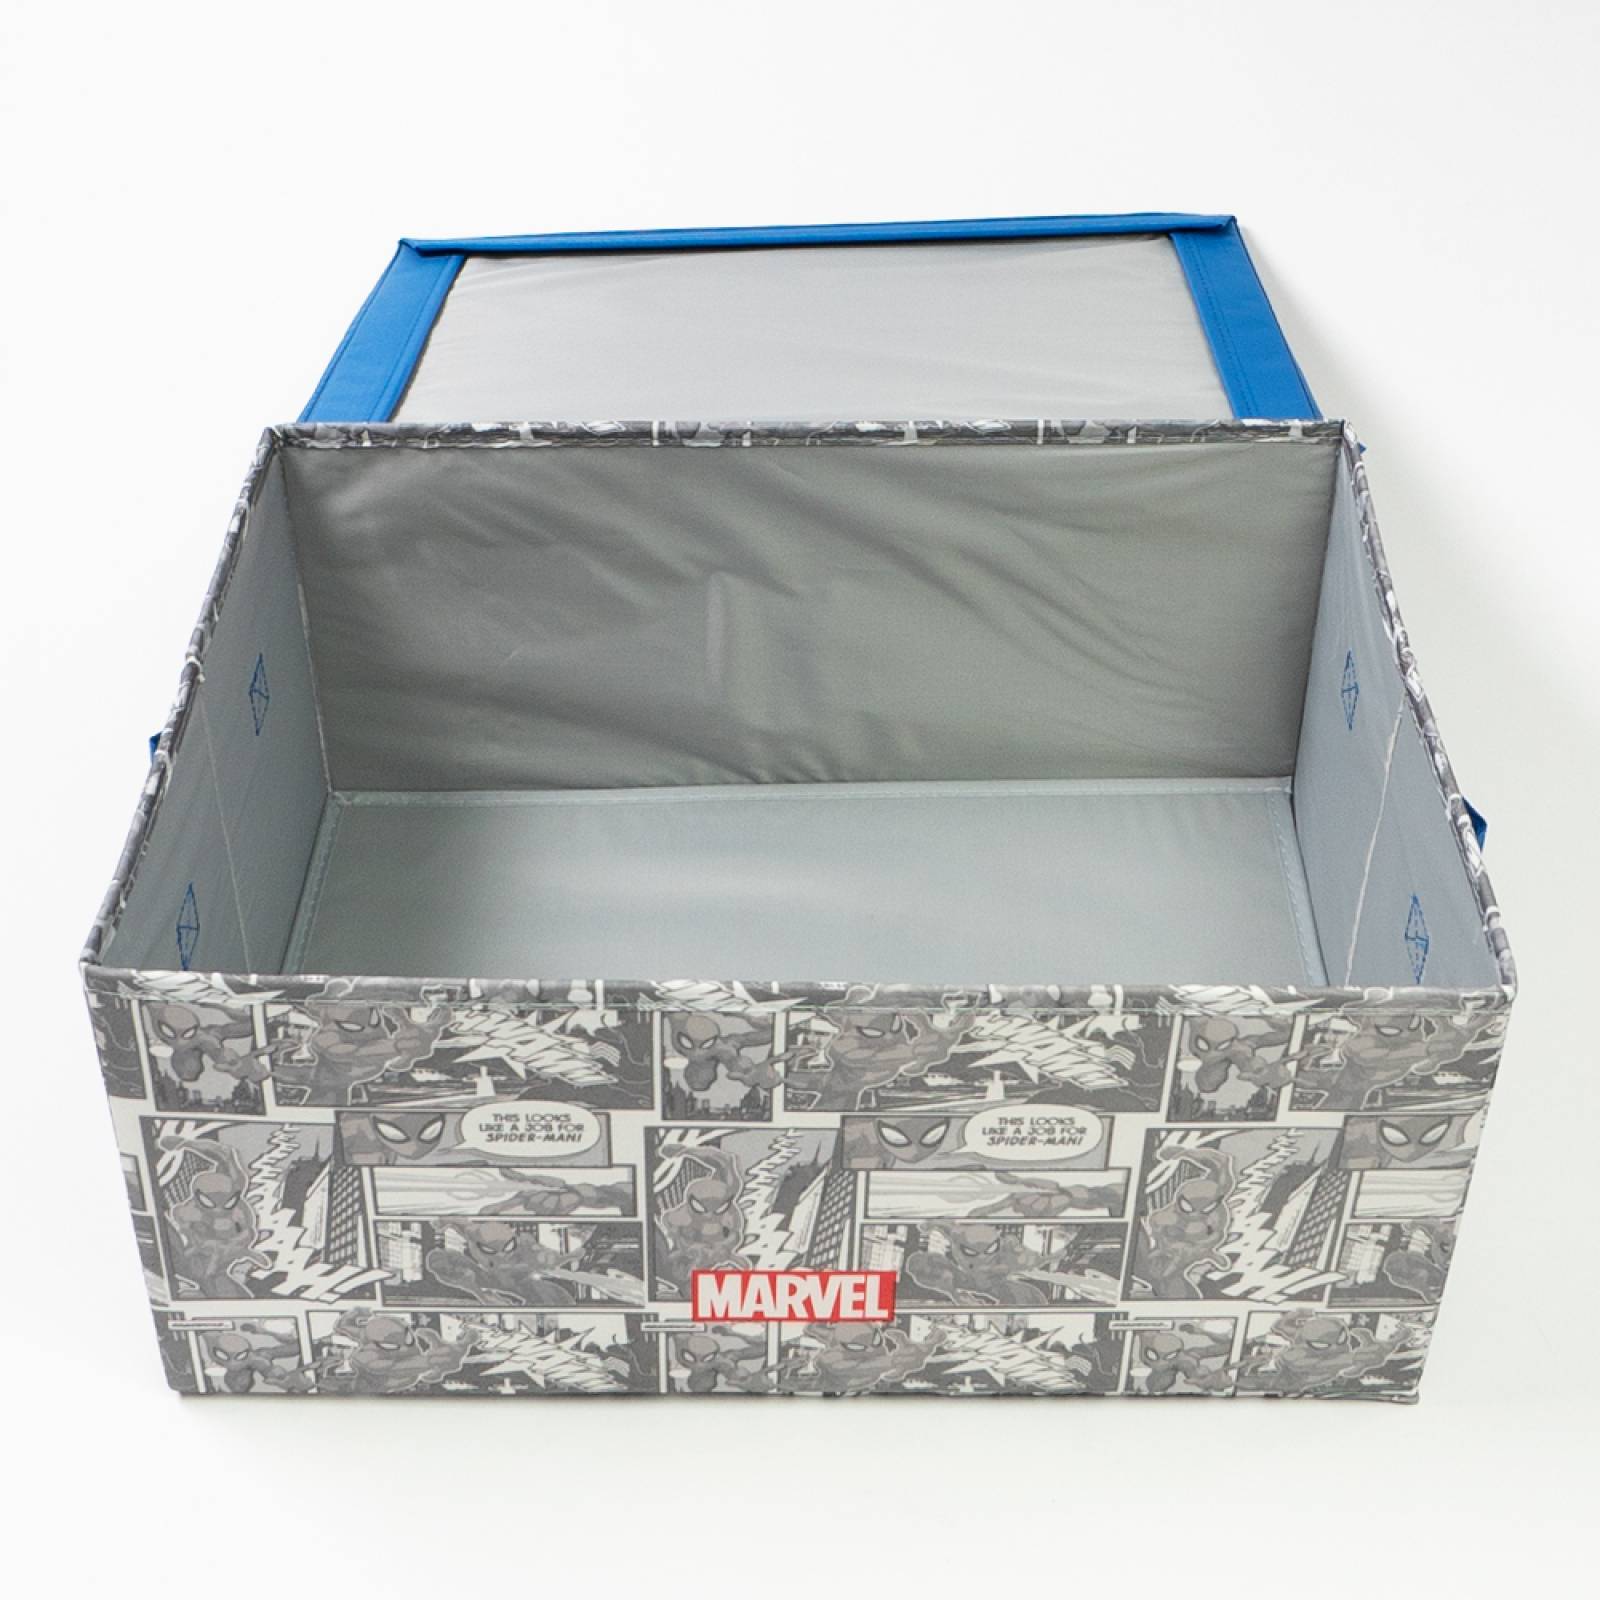 Miniso Caja De Almacenamiento Con Tapa Marvel Spiderman Diseño Tipo Cómic Tela 42x30 cm